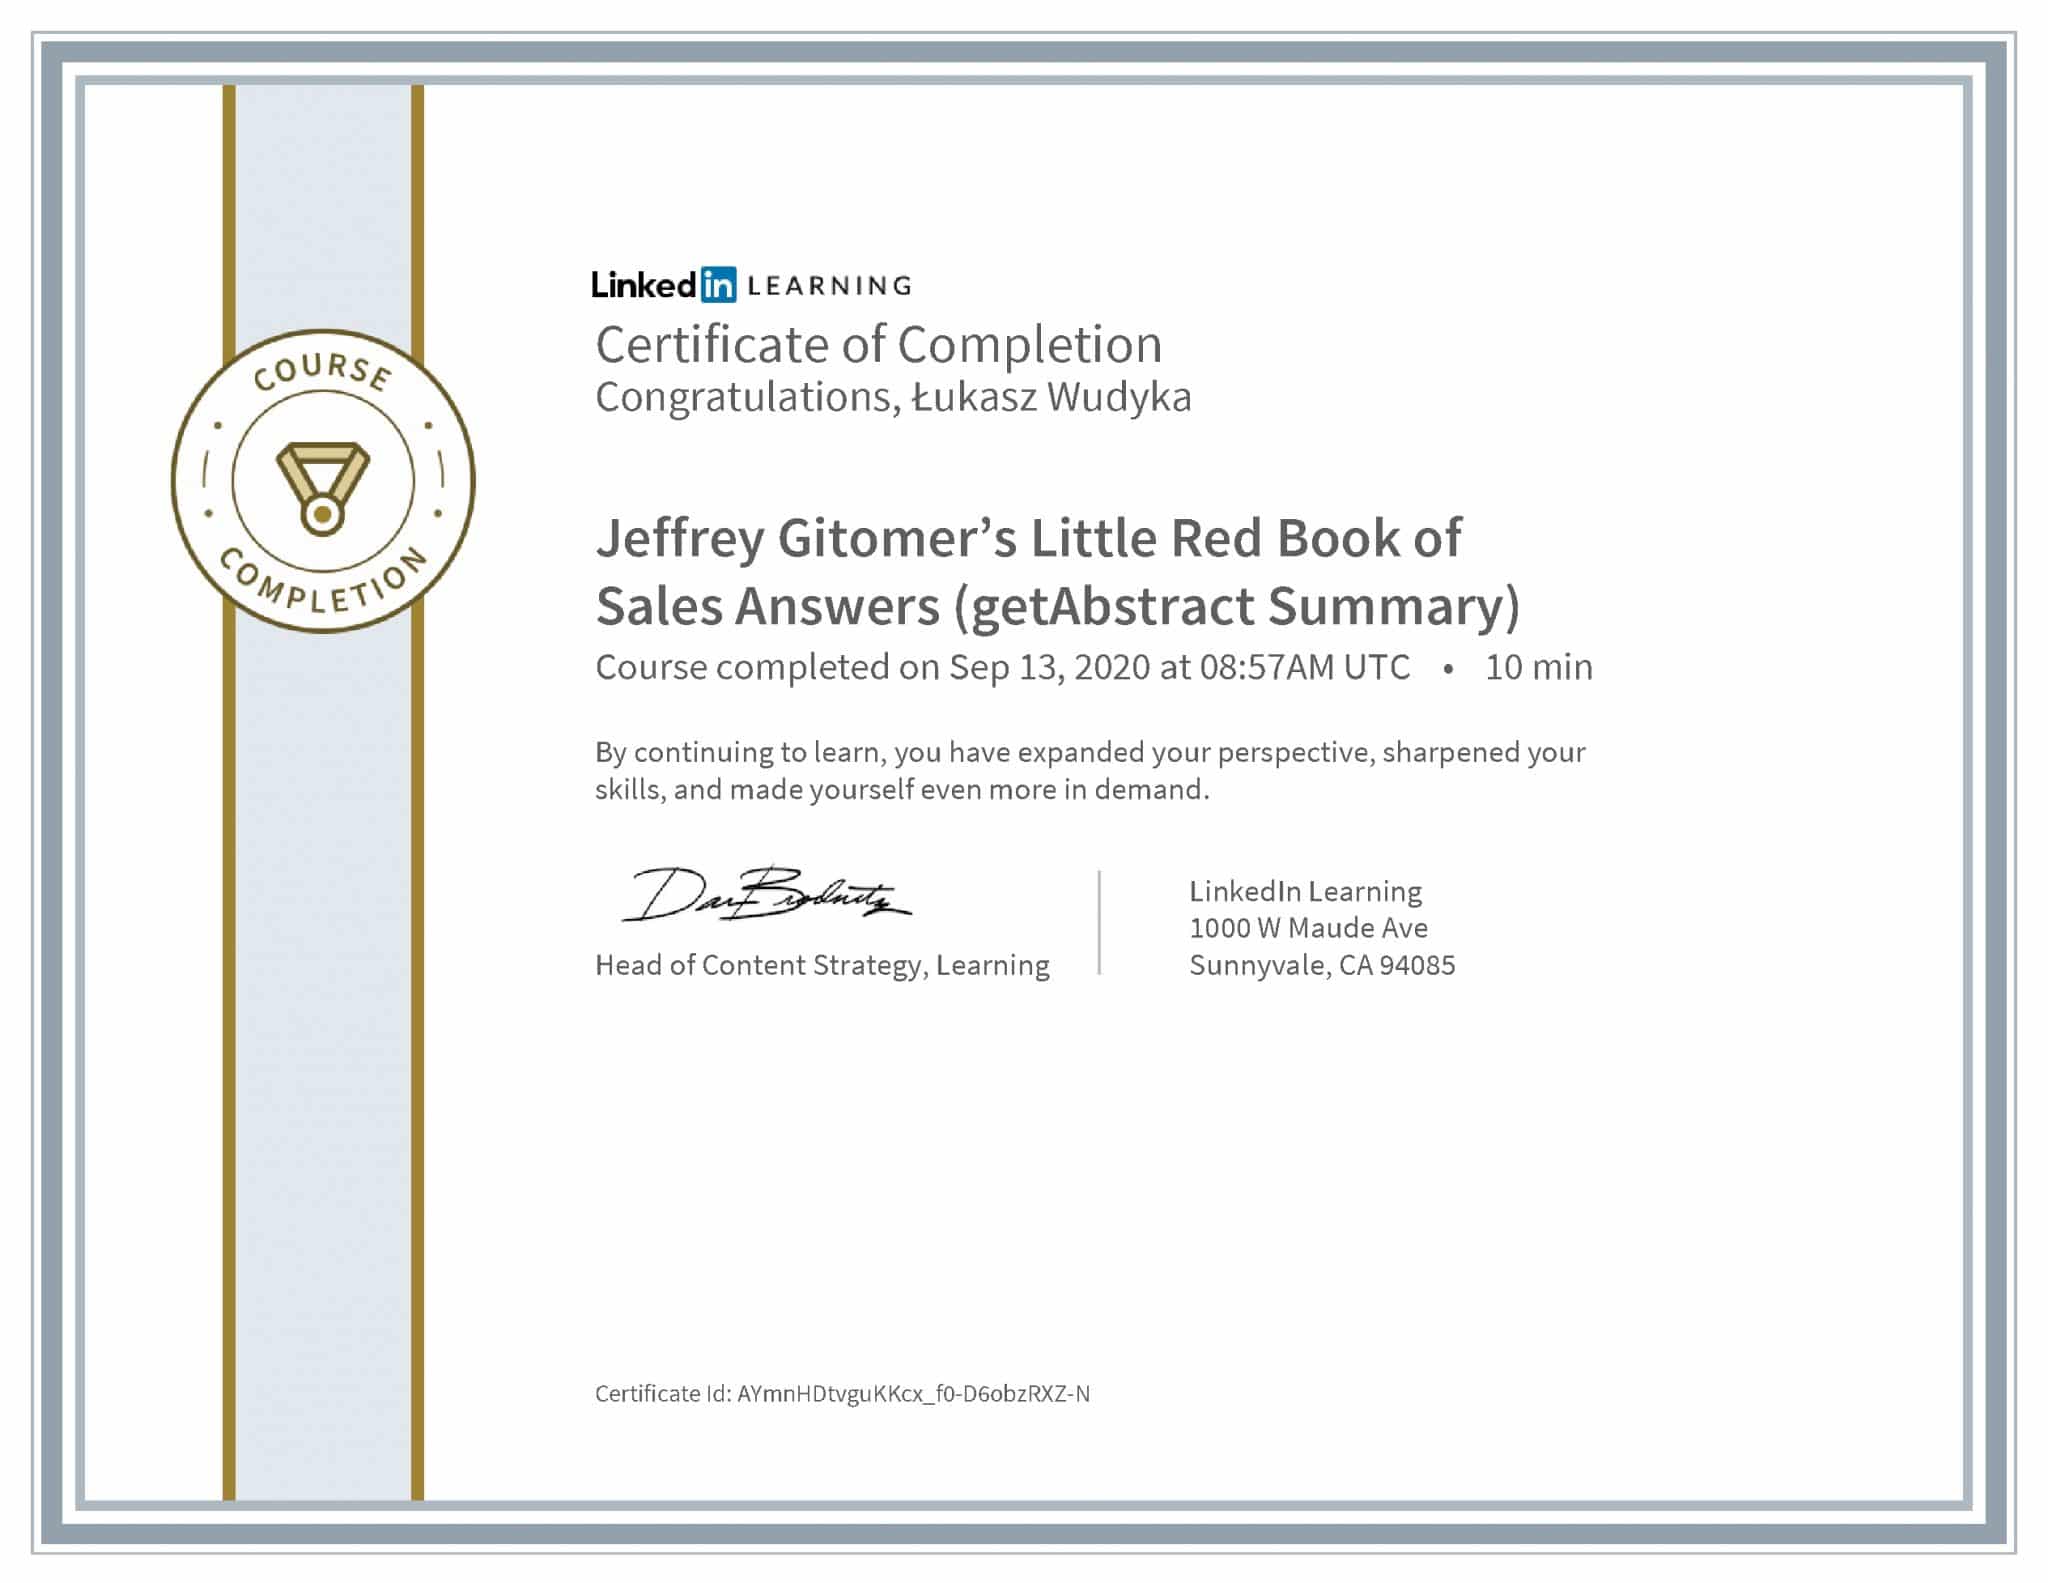 Łukasz Wudyka certyfikat LinkedIn Jeffrey Gitomer's Little Red Book of Sales Answers (getAbstract Summary)